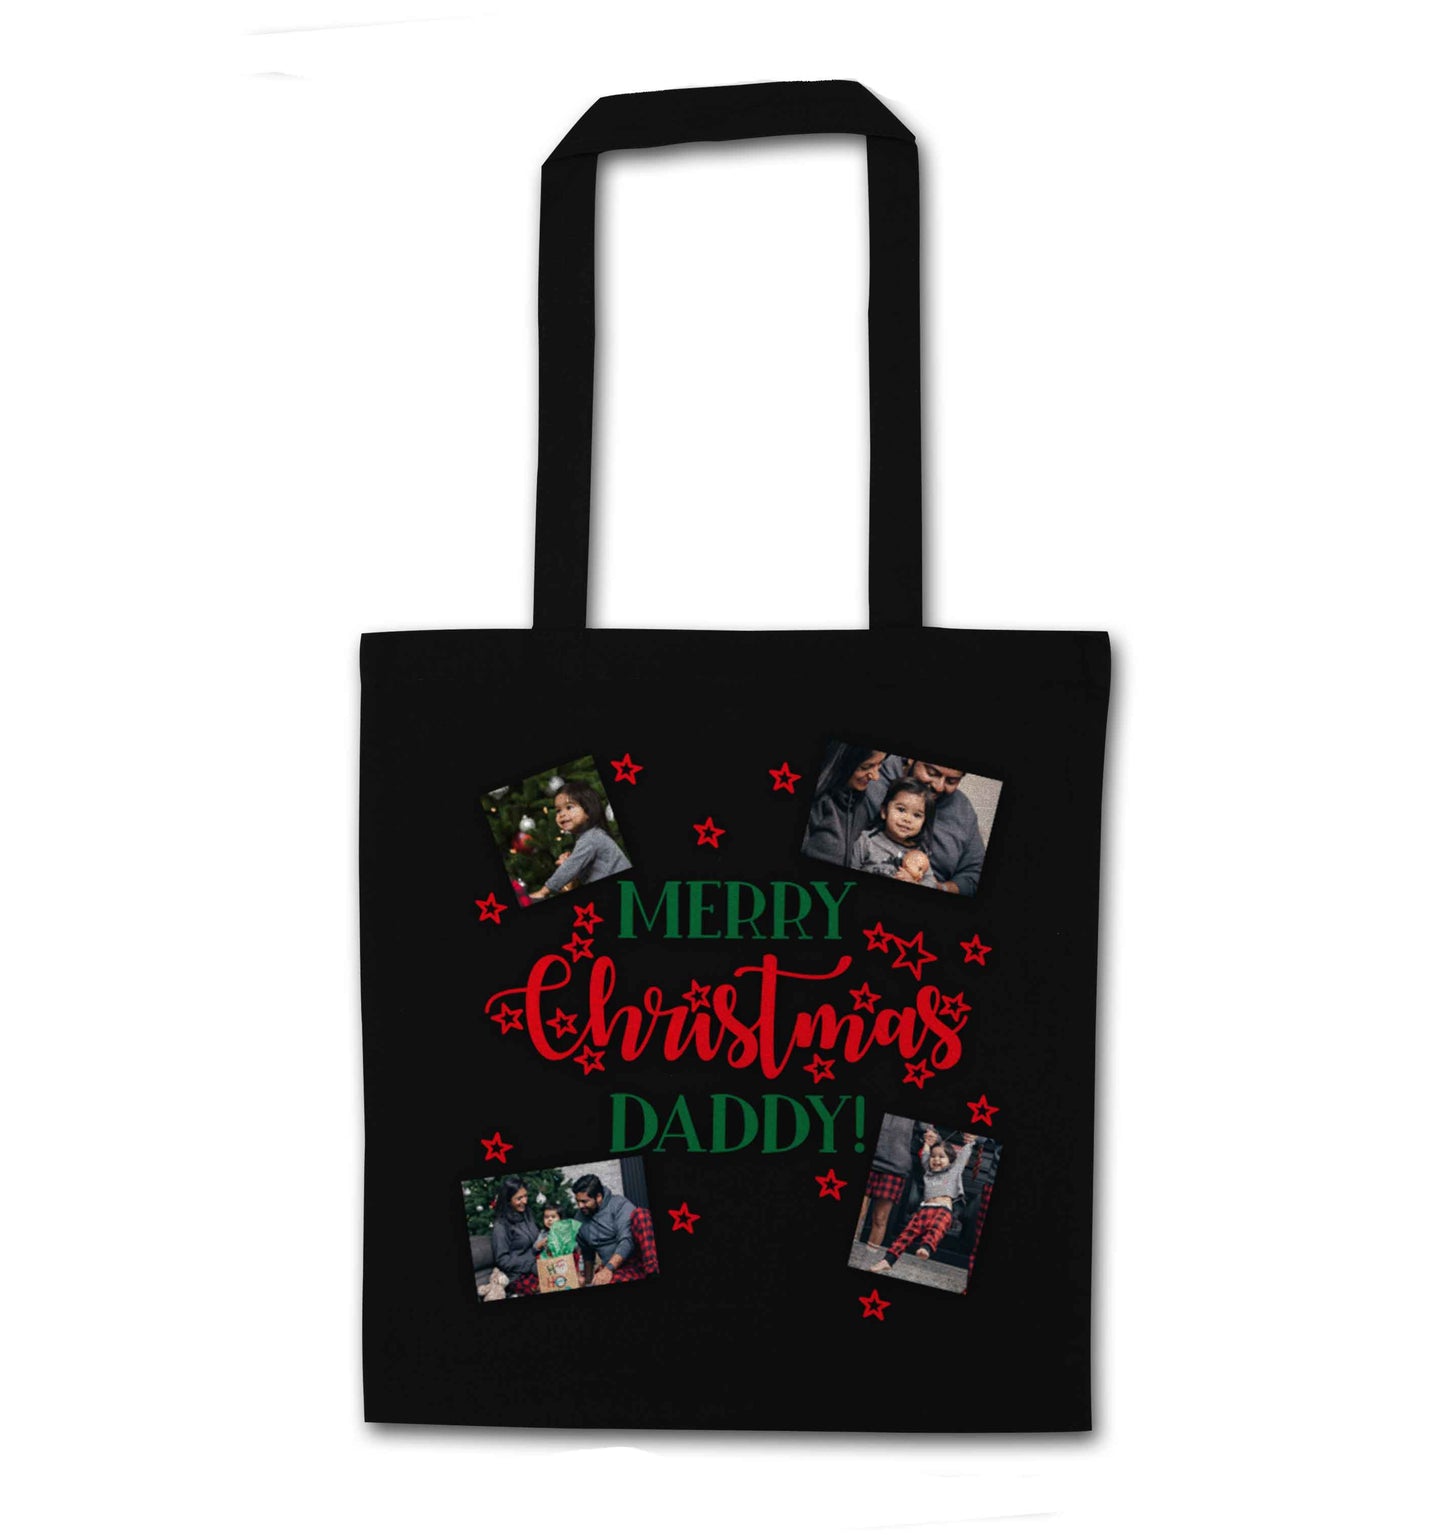 Merry Christmas daddy black tote bag